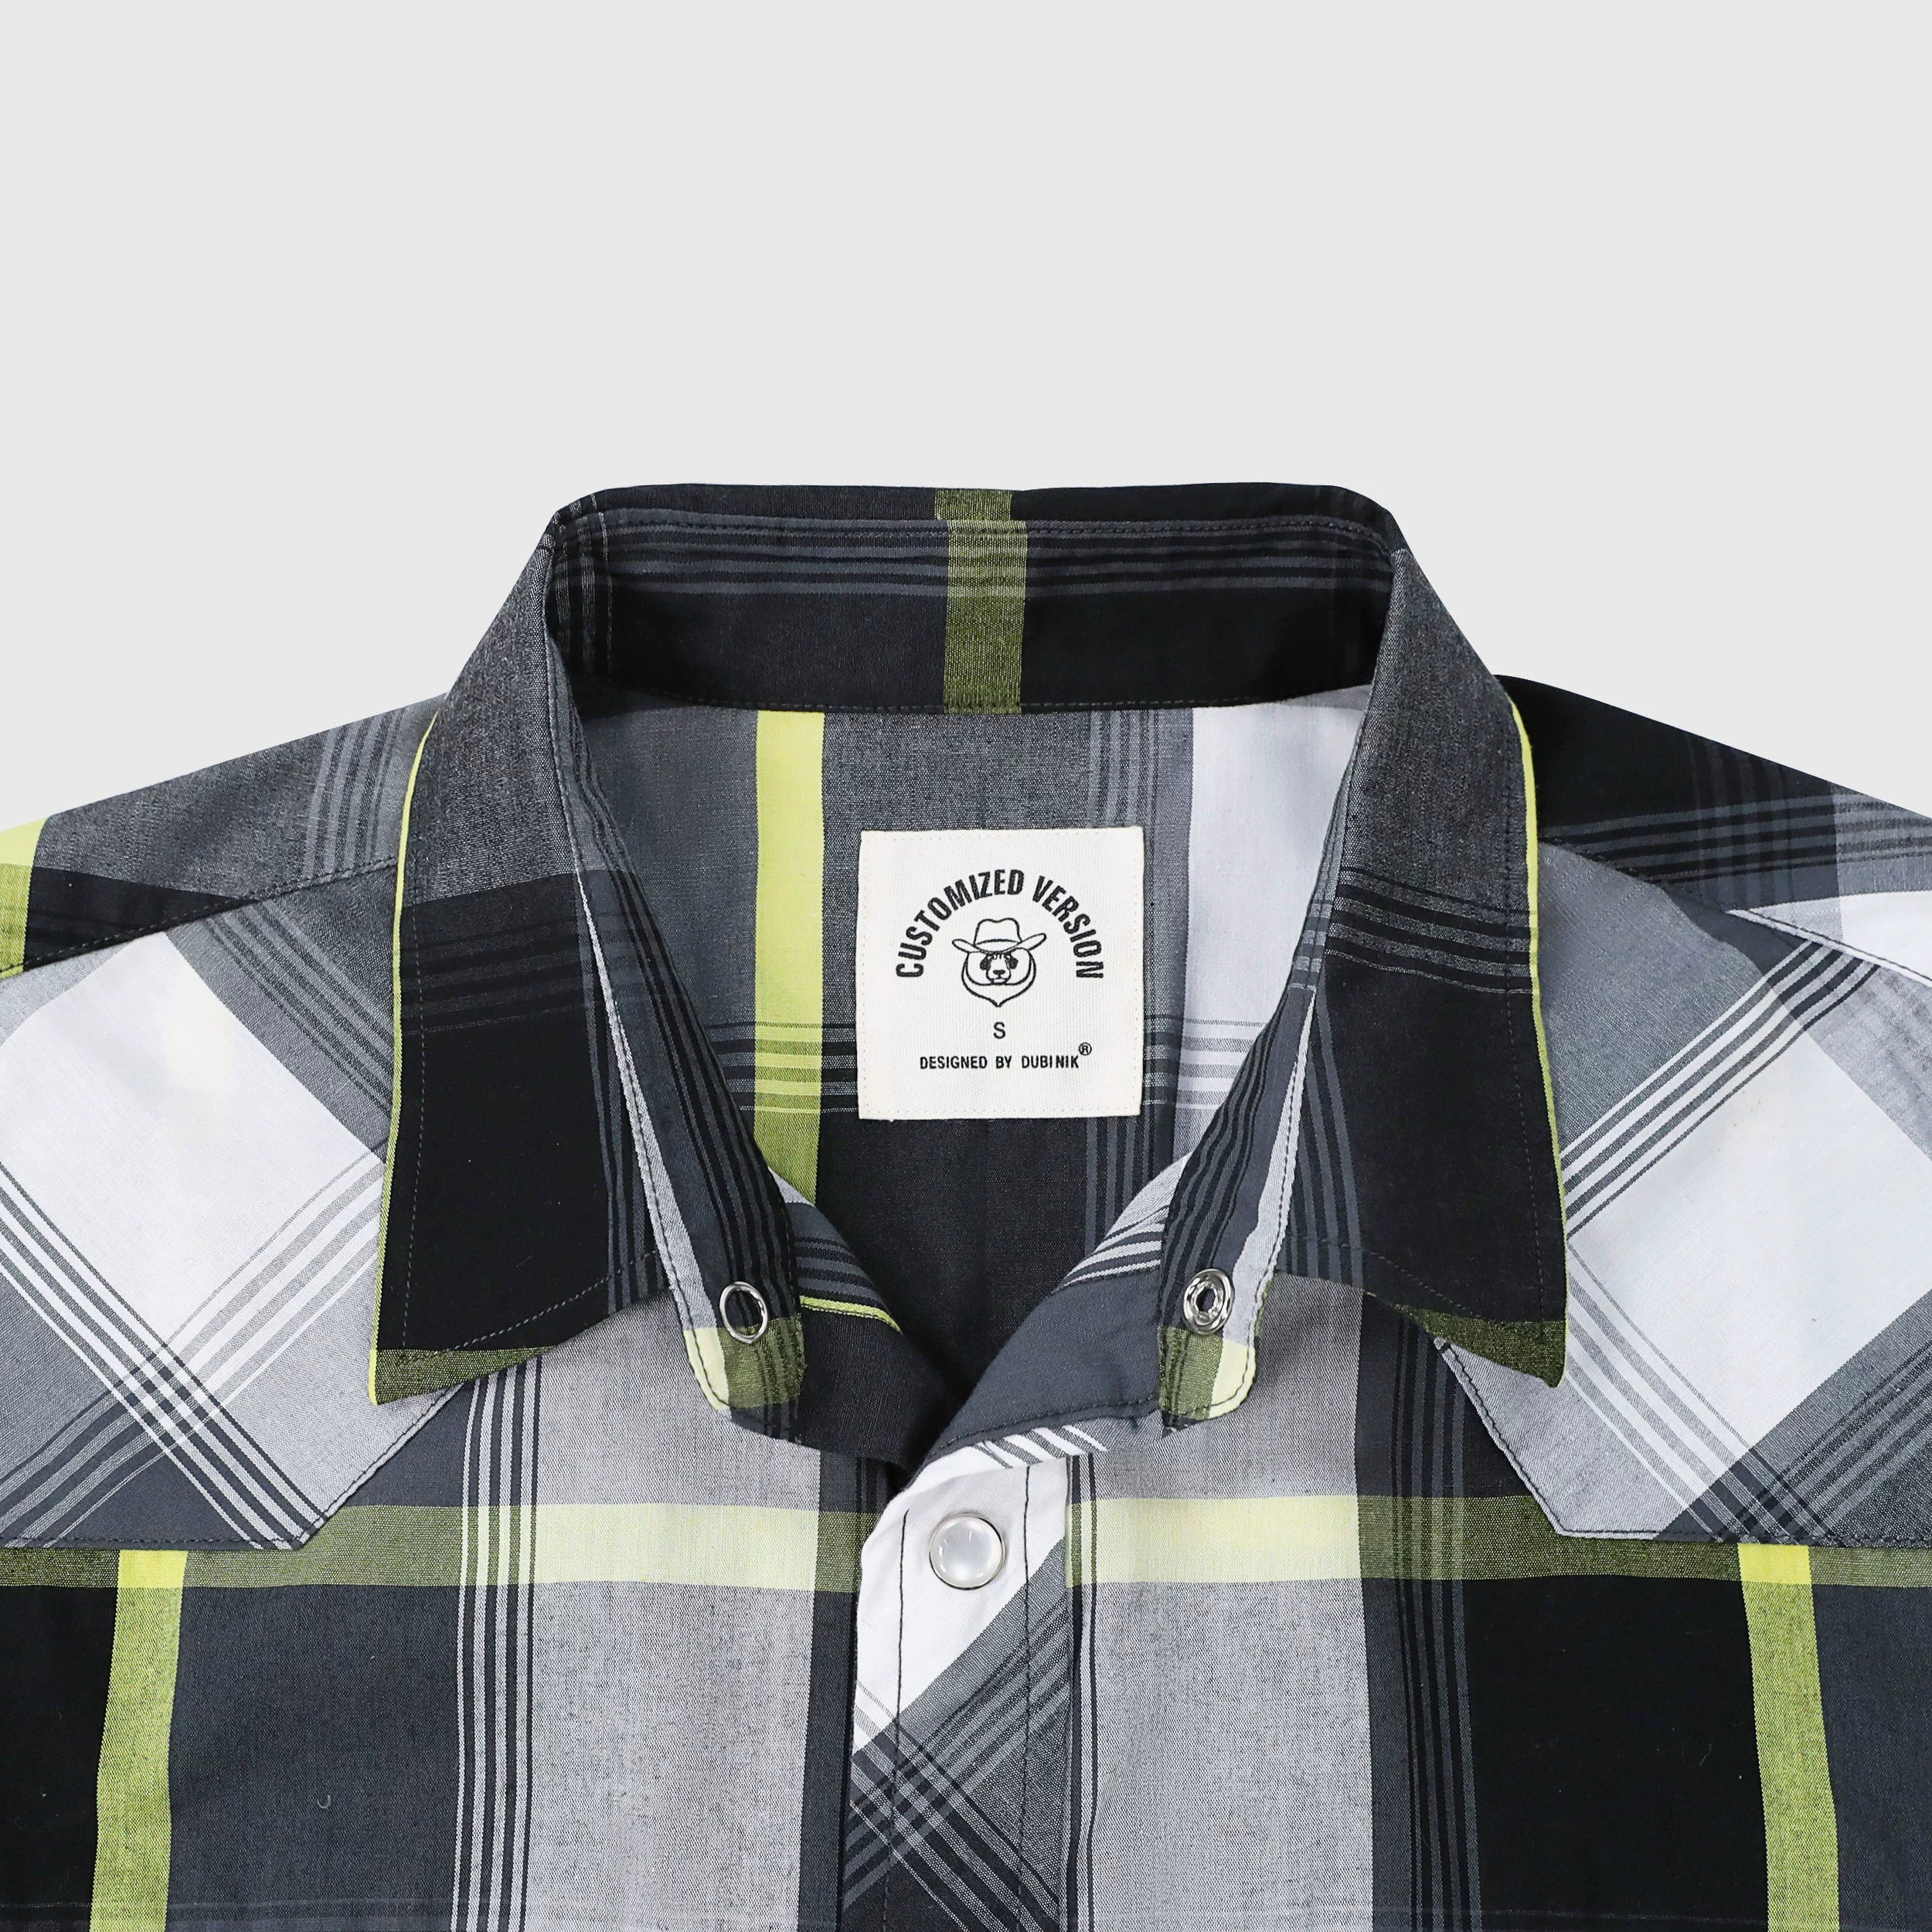 Dubinik® Pearl Snap Shirts for Men Long Sleeve Western Shirts for Men Vintage Casual Plaid Shirt Cowboy Shirts for Men#42017